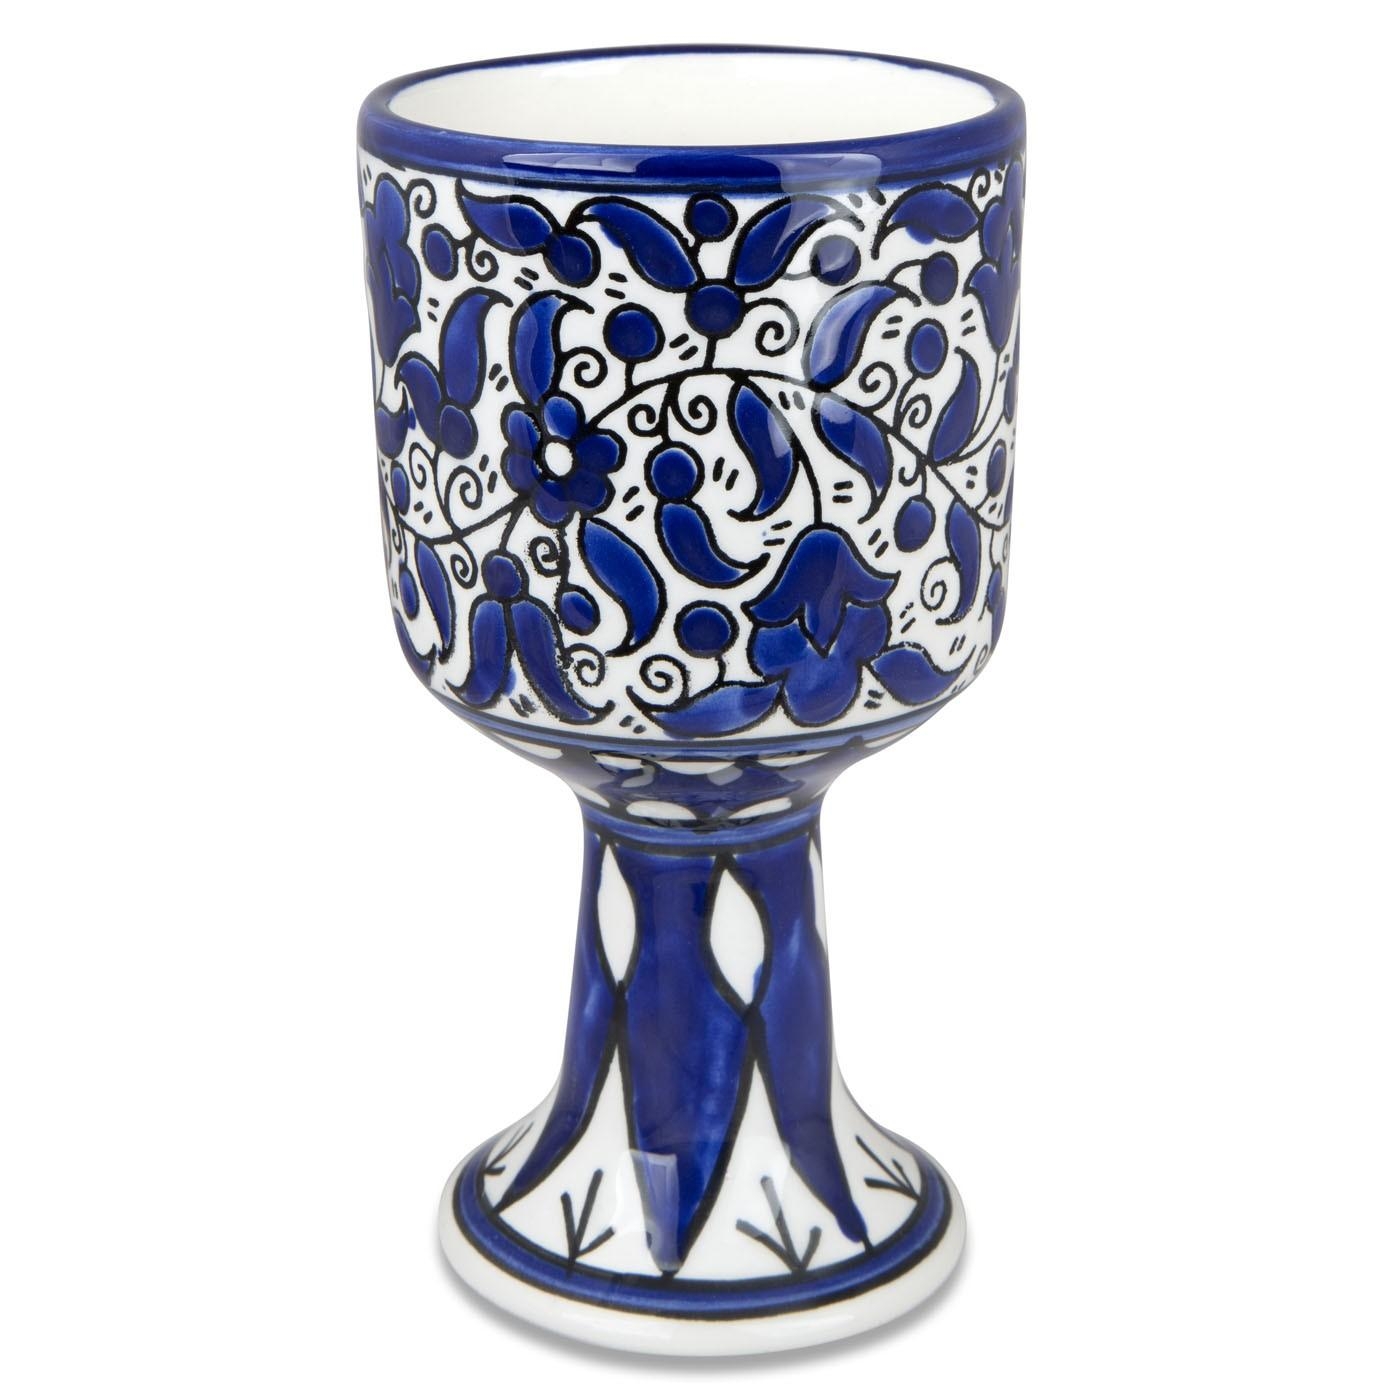 Armenian Ceramic Kiddush Cup - Floral Motif  - 1